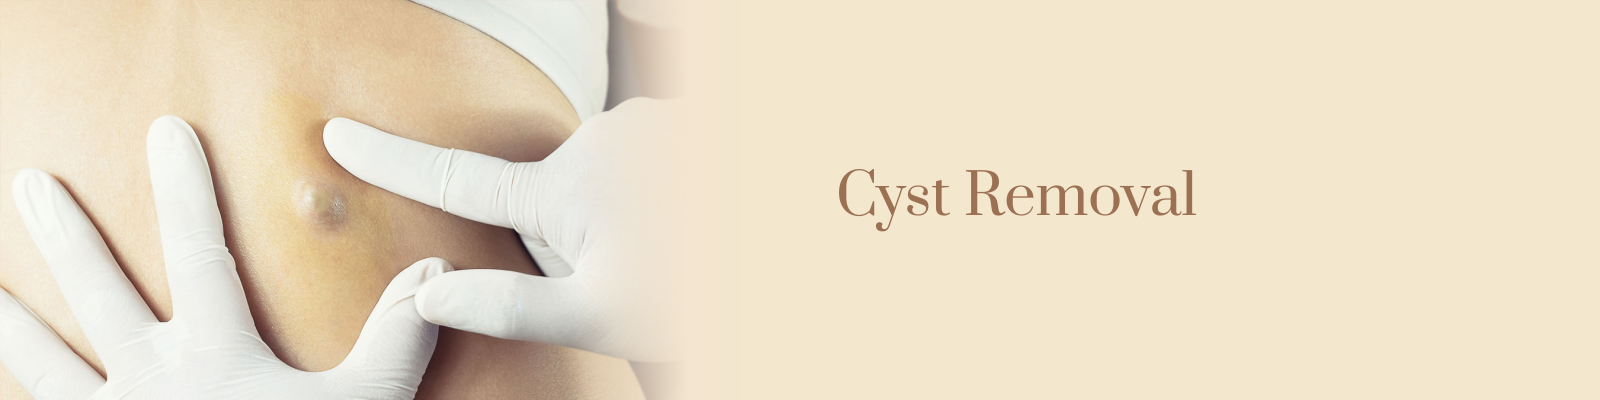 Cyst Removal Treatment in Delhi